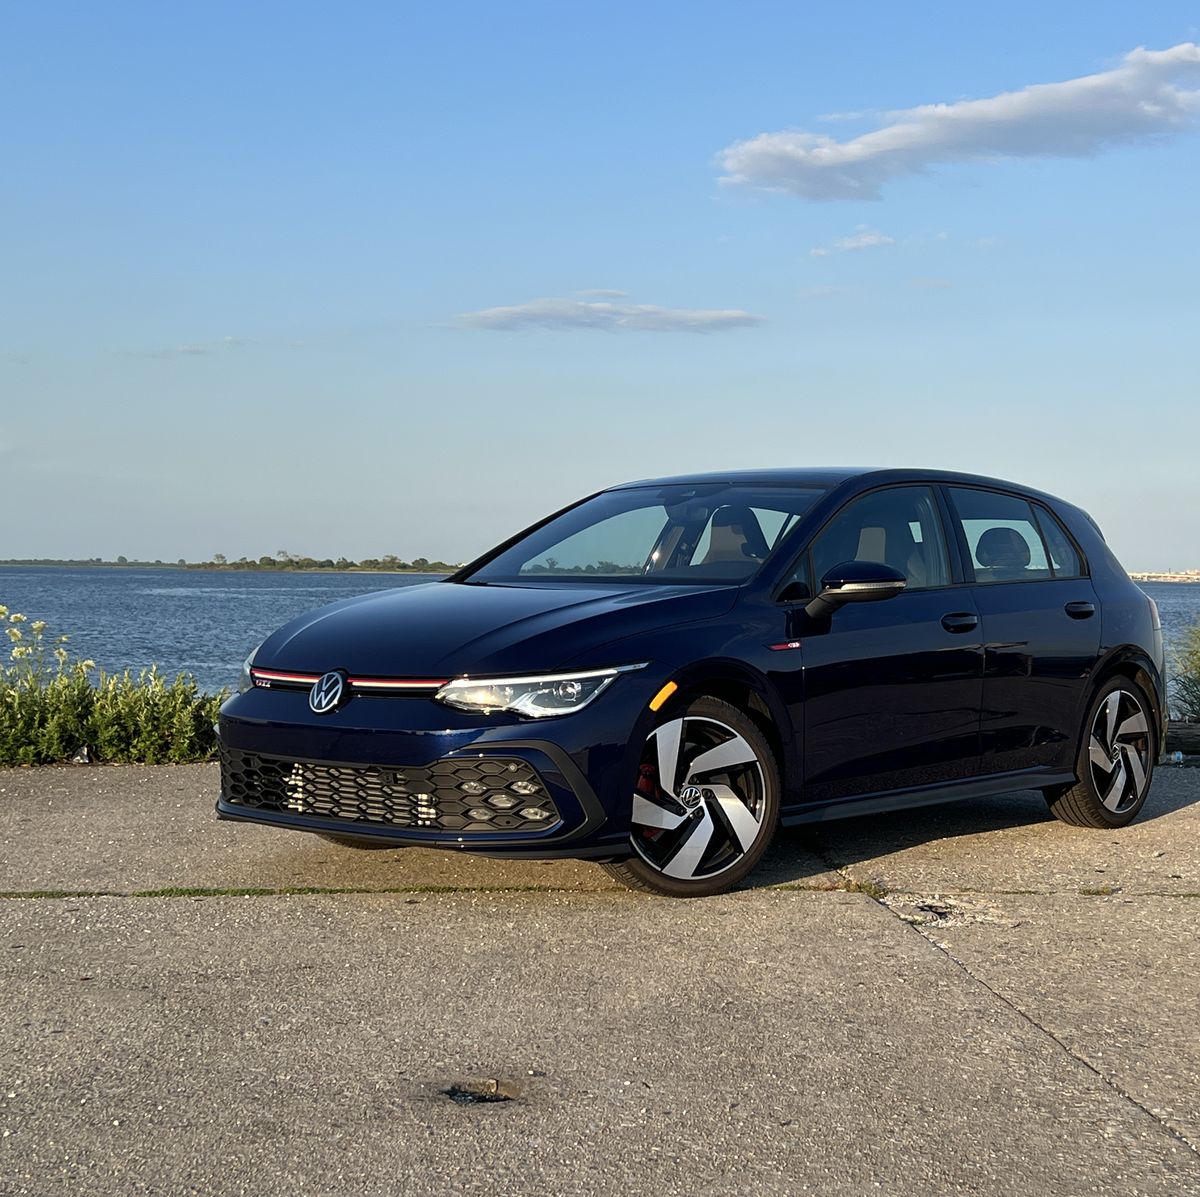 New 2021 VW Golf 8 GTI Specs & Price